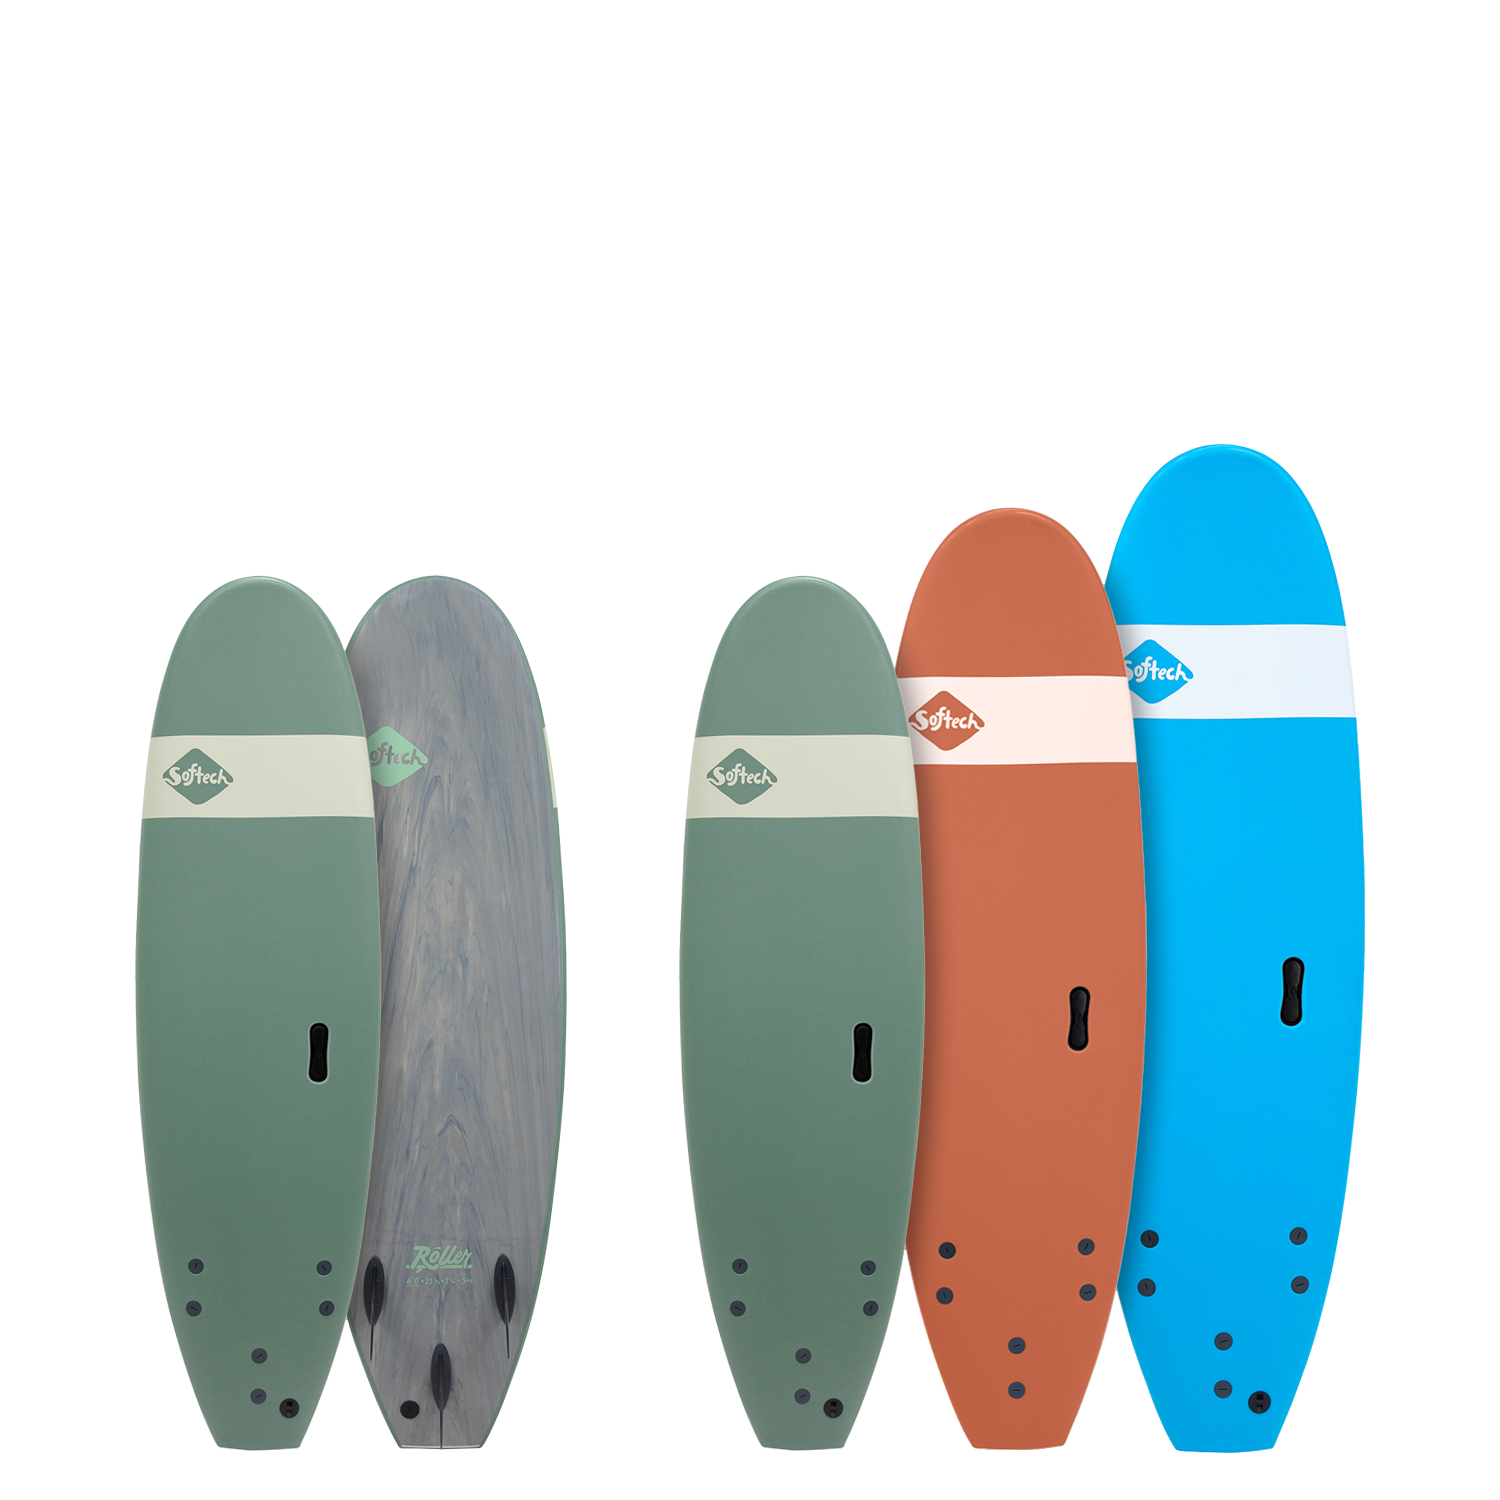 Softech | Surf Roller